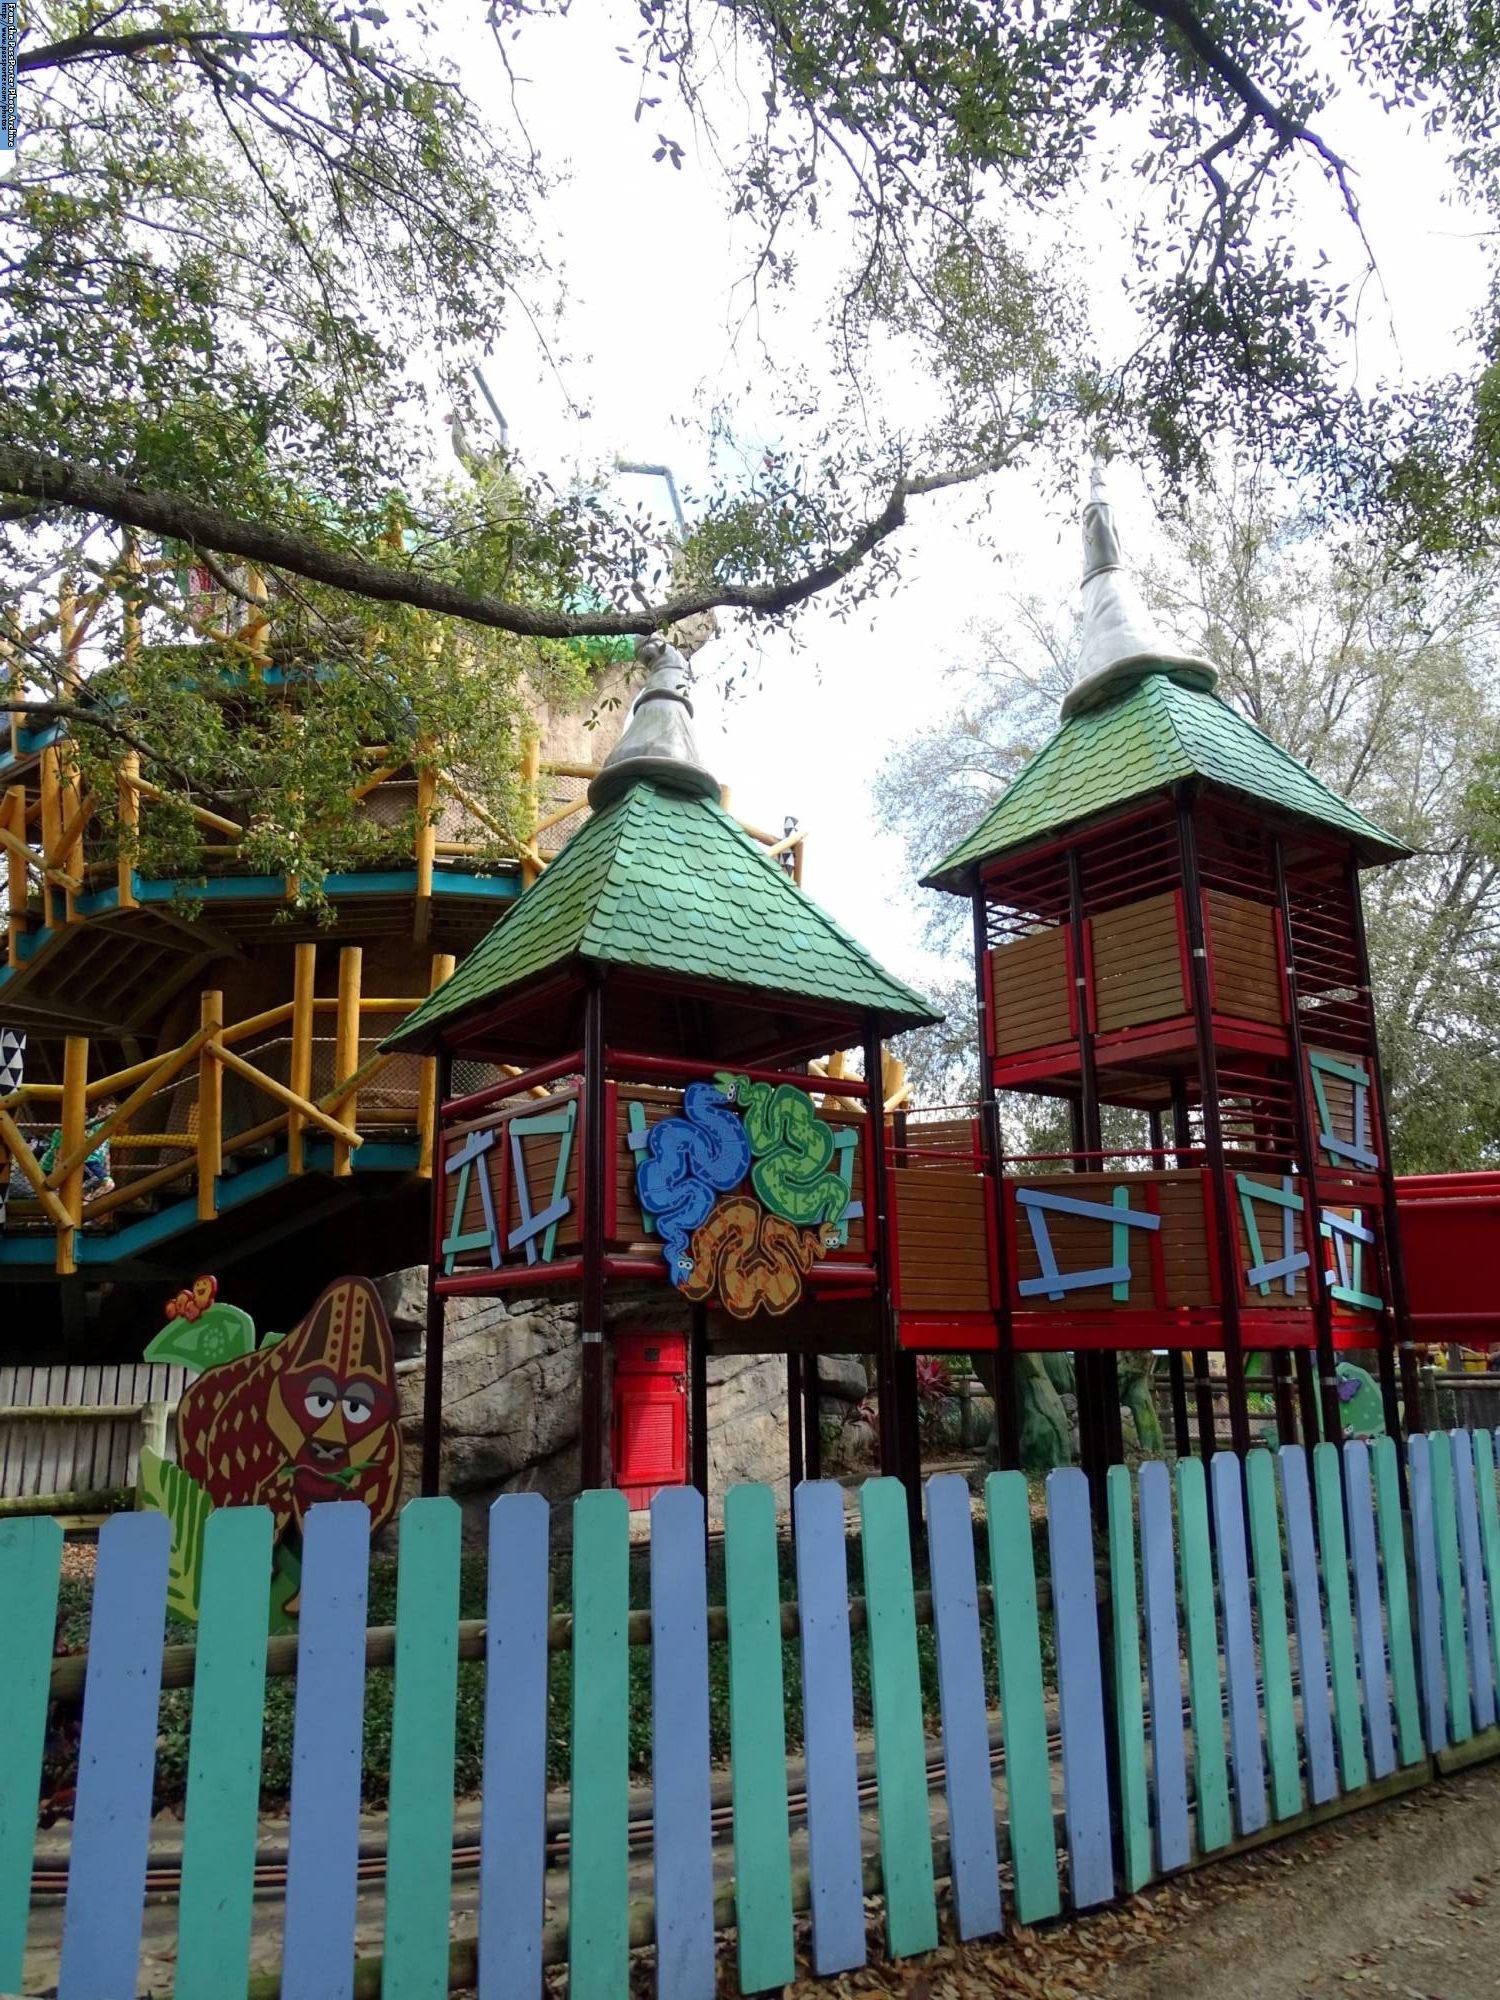 Busch Gardens - Sesame Street Safari of Fun